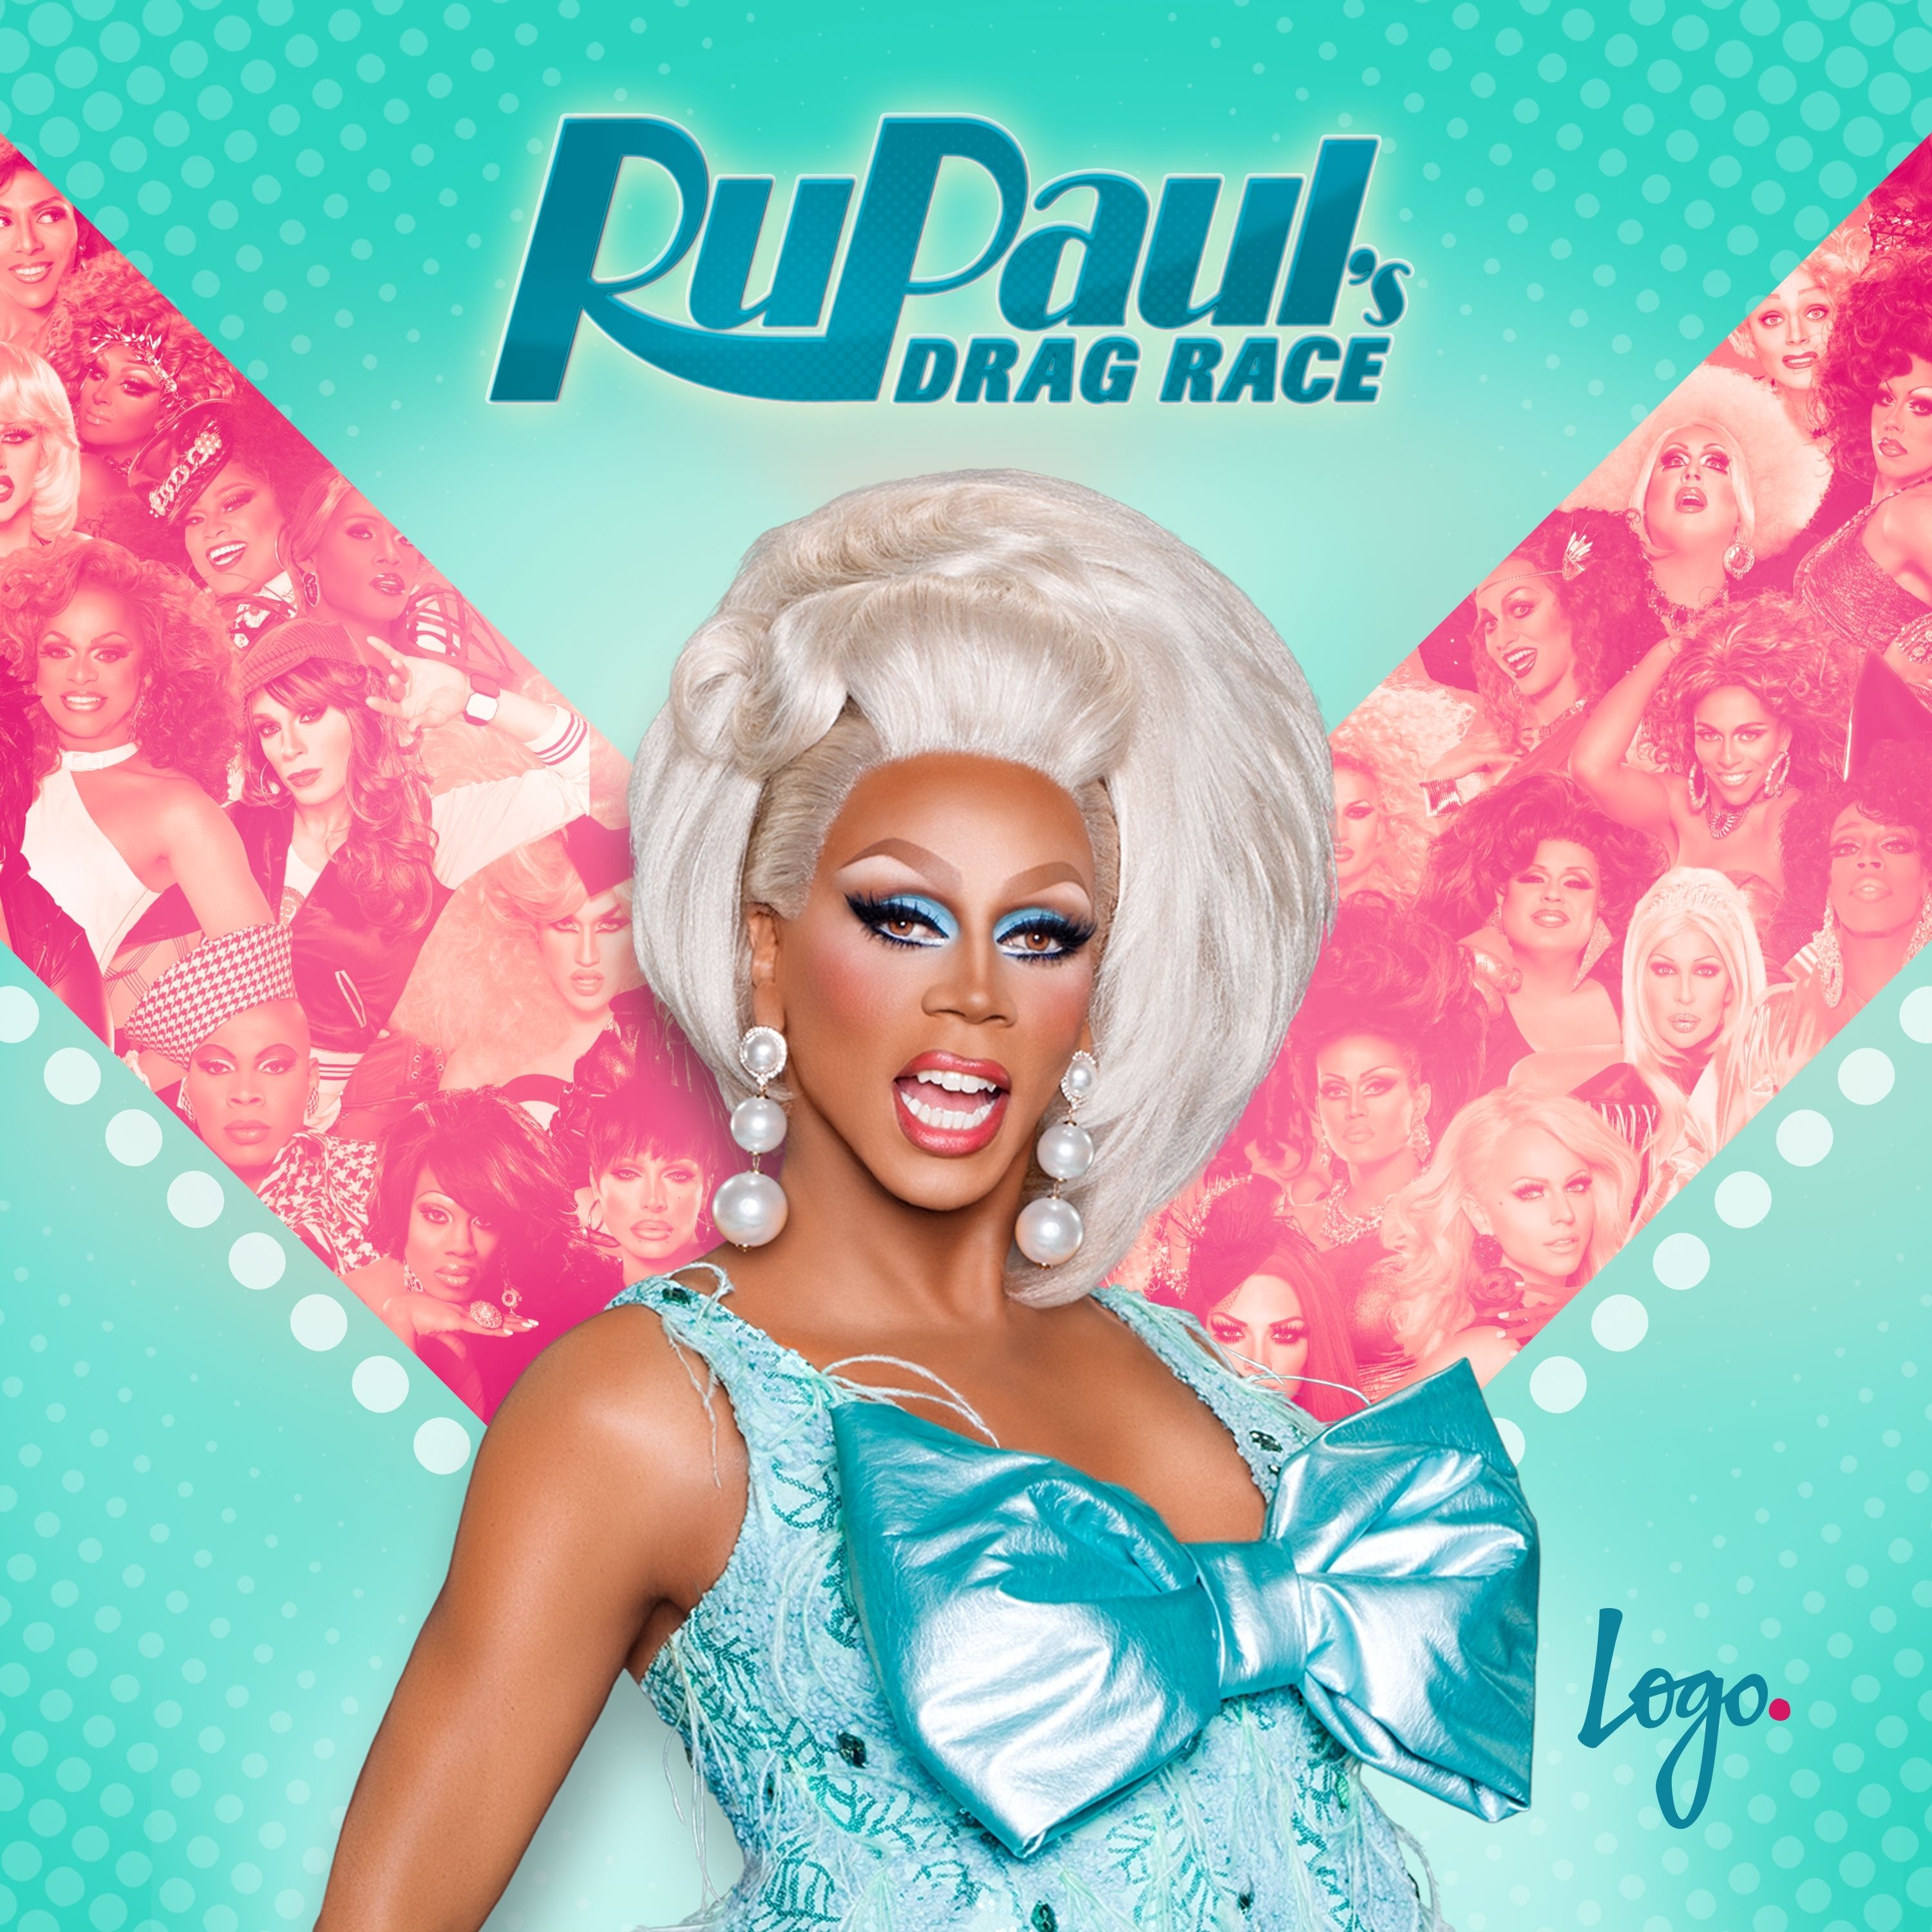 Bob the Drag Queen On 'RuPaul's Drag Race' Season 9 Premiere